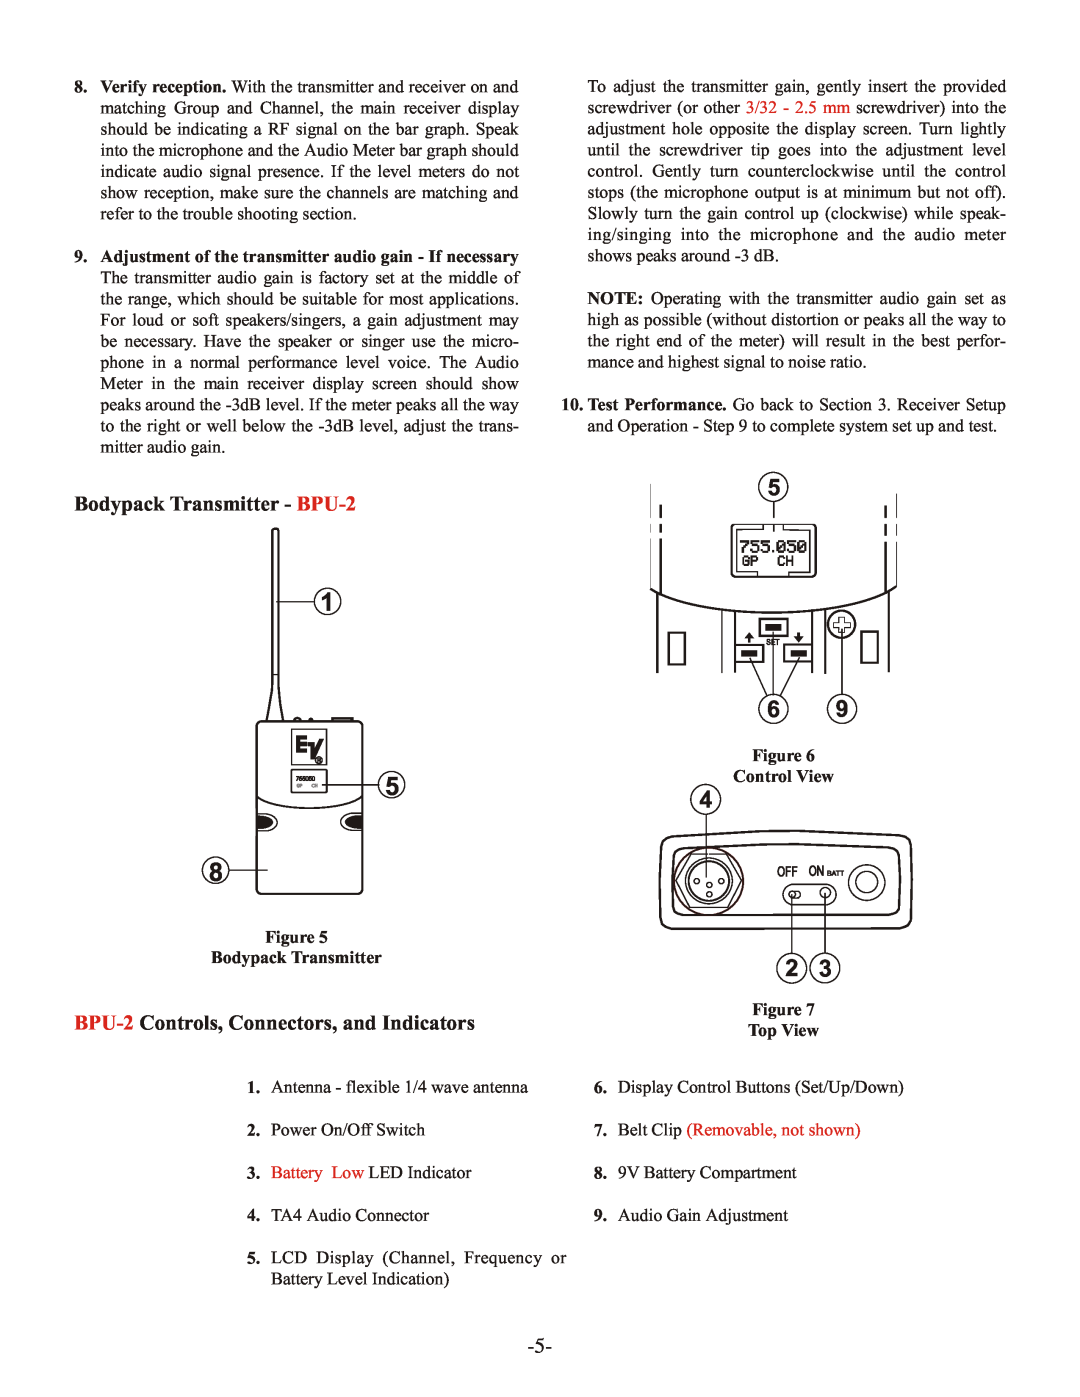 Telex RE-2 manual Bodypack Transmitter - BPU-2, BPU-2 Controls, Connectors, and Indicators, Figure Bodypack Transmitter 